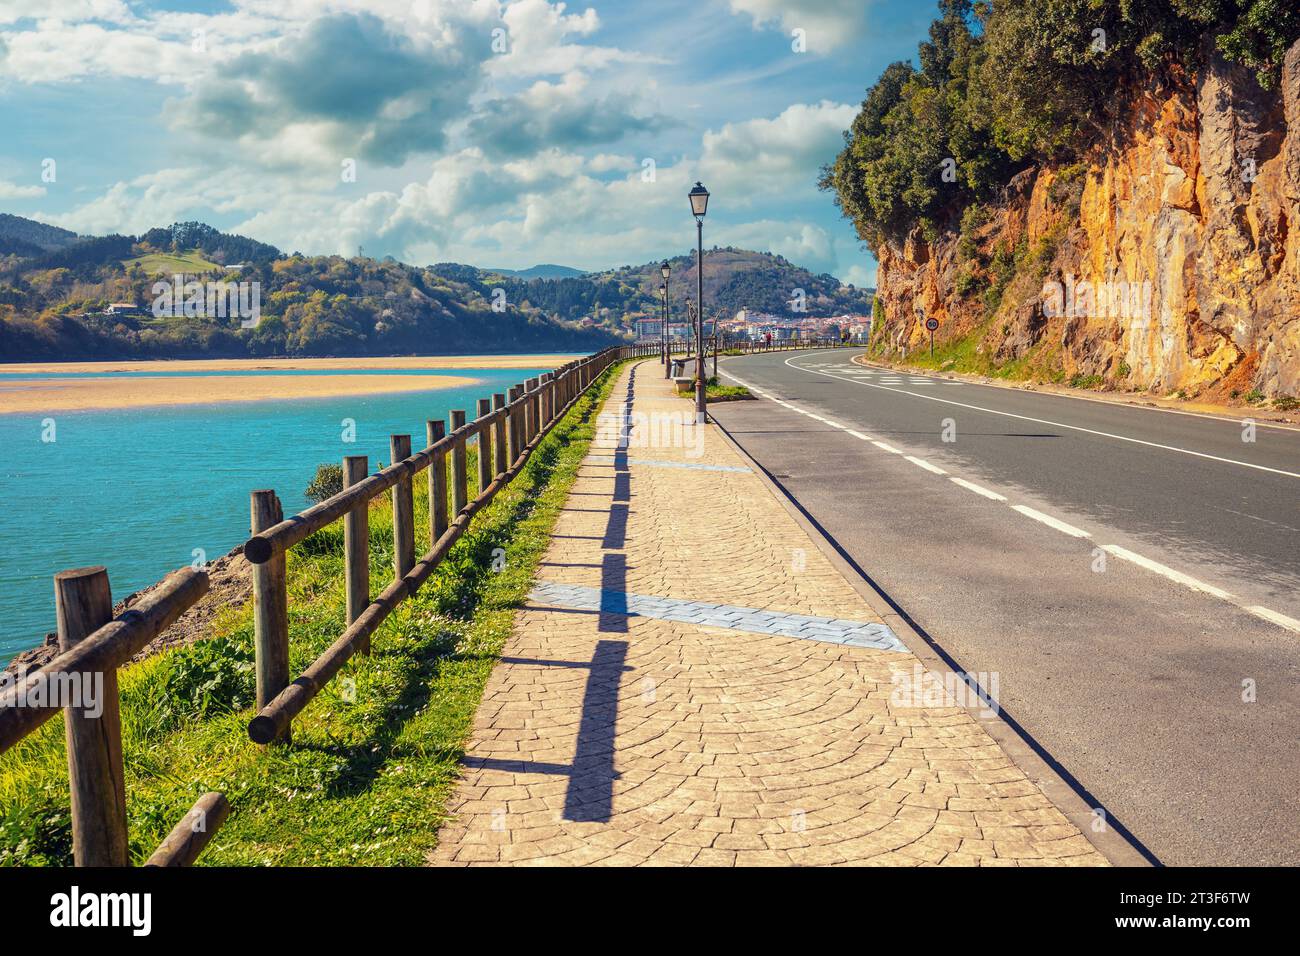 Embankment in Ibarrangelu near Laidu beach, Basque Country, northern Spain Stock Photo